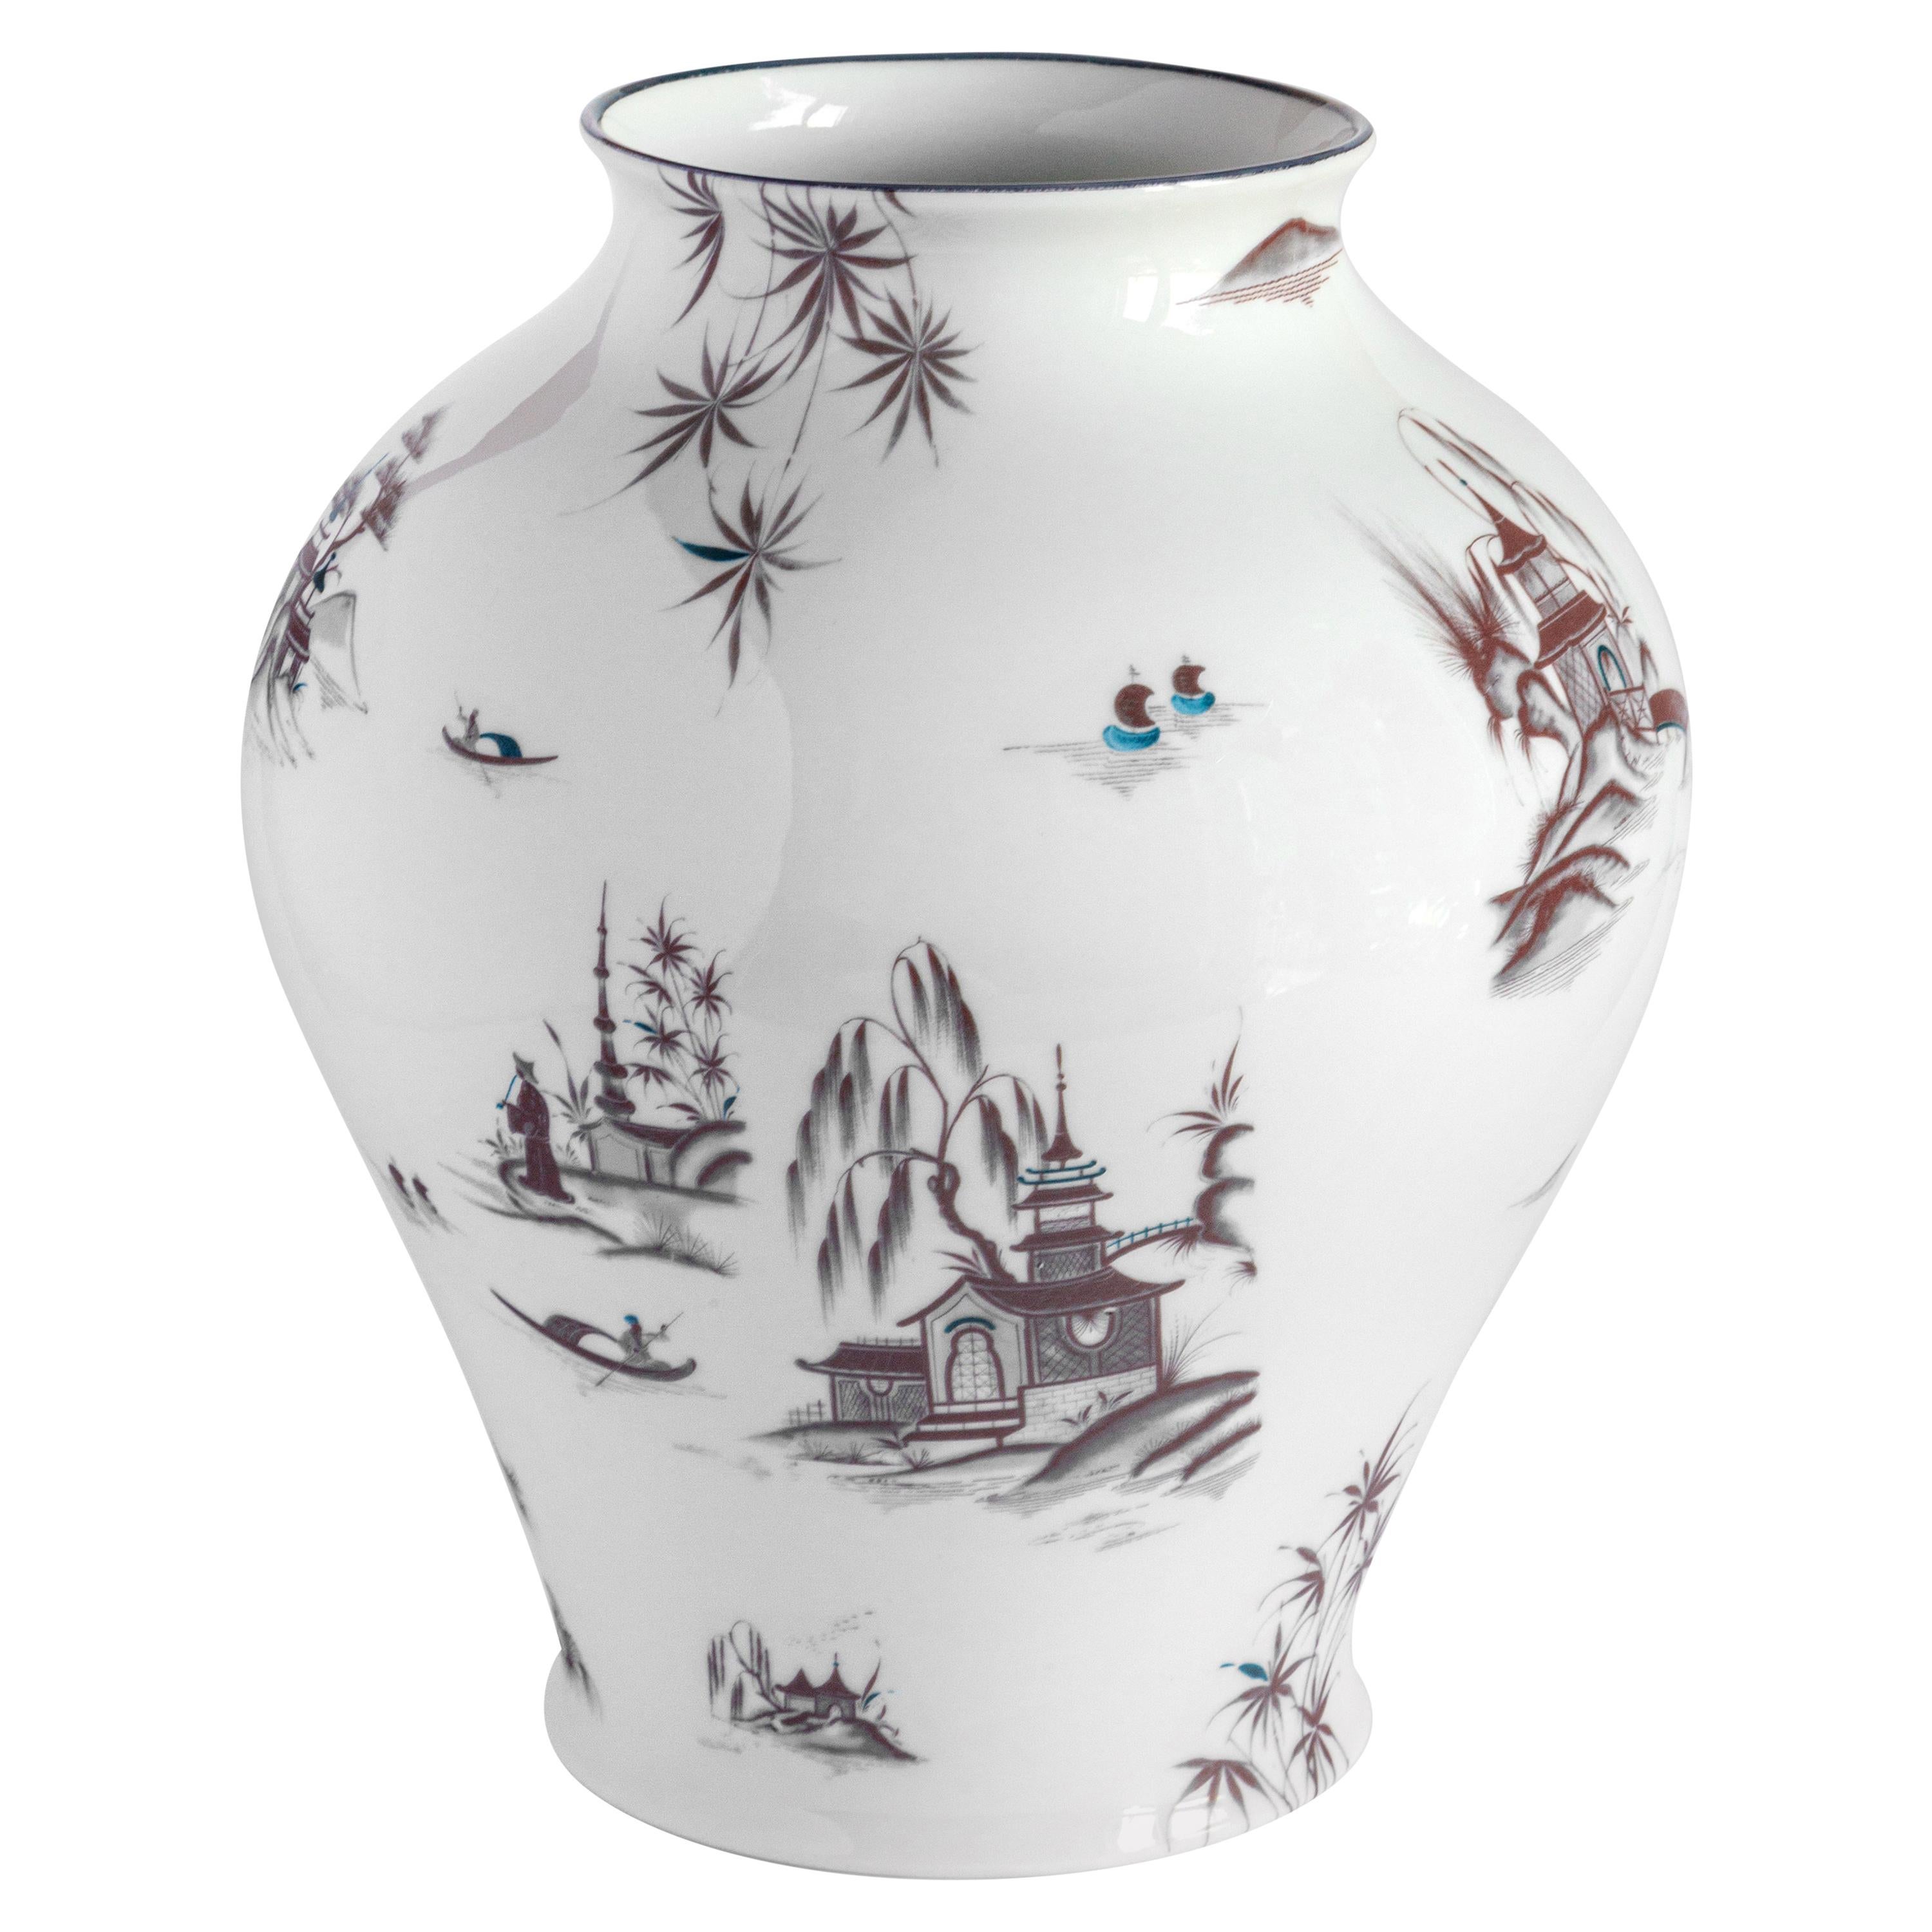 Natsumi, Contemporary Porcelain Vase with Decorative Design by Vito Nesta For Sale